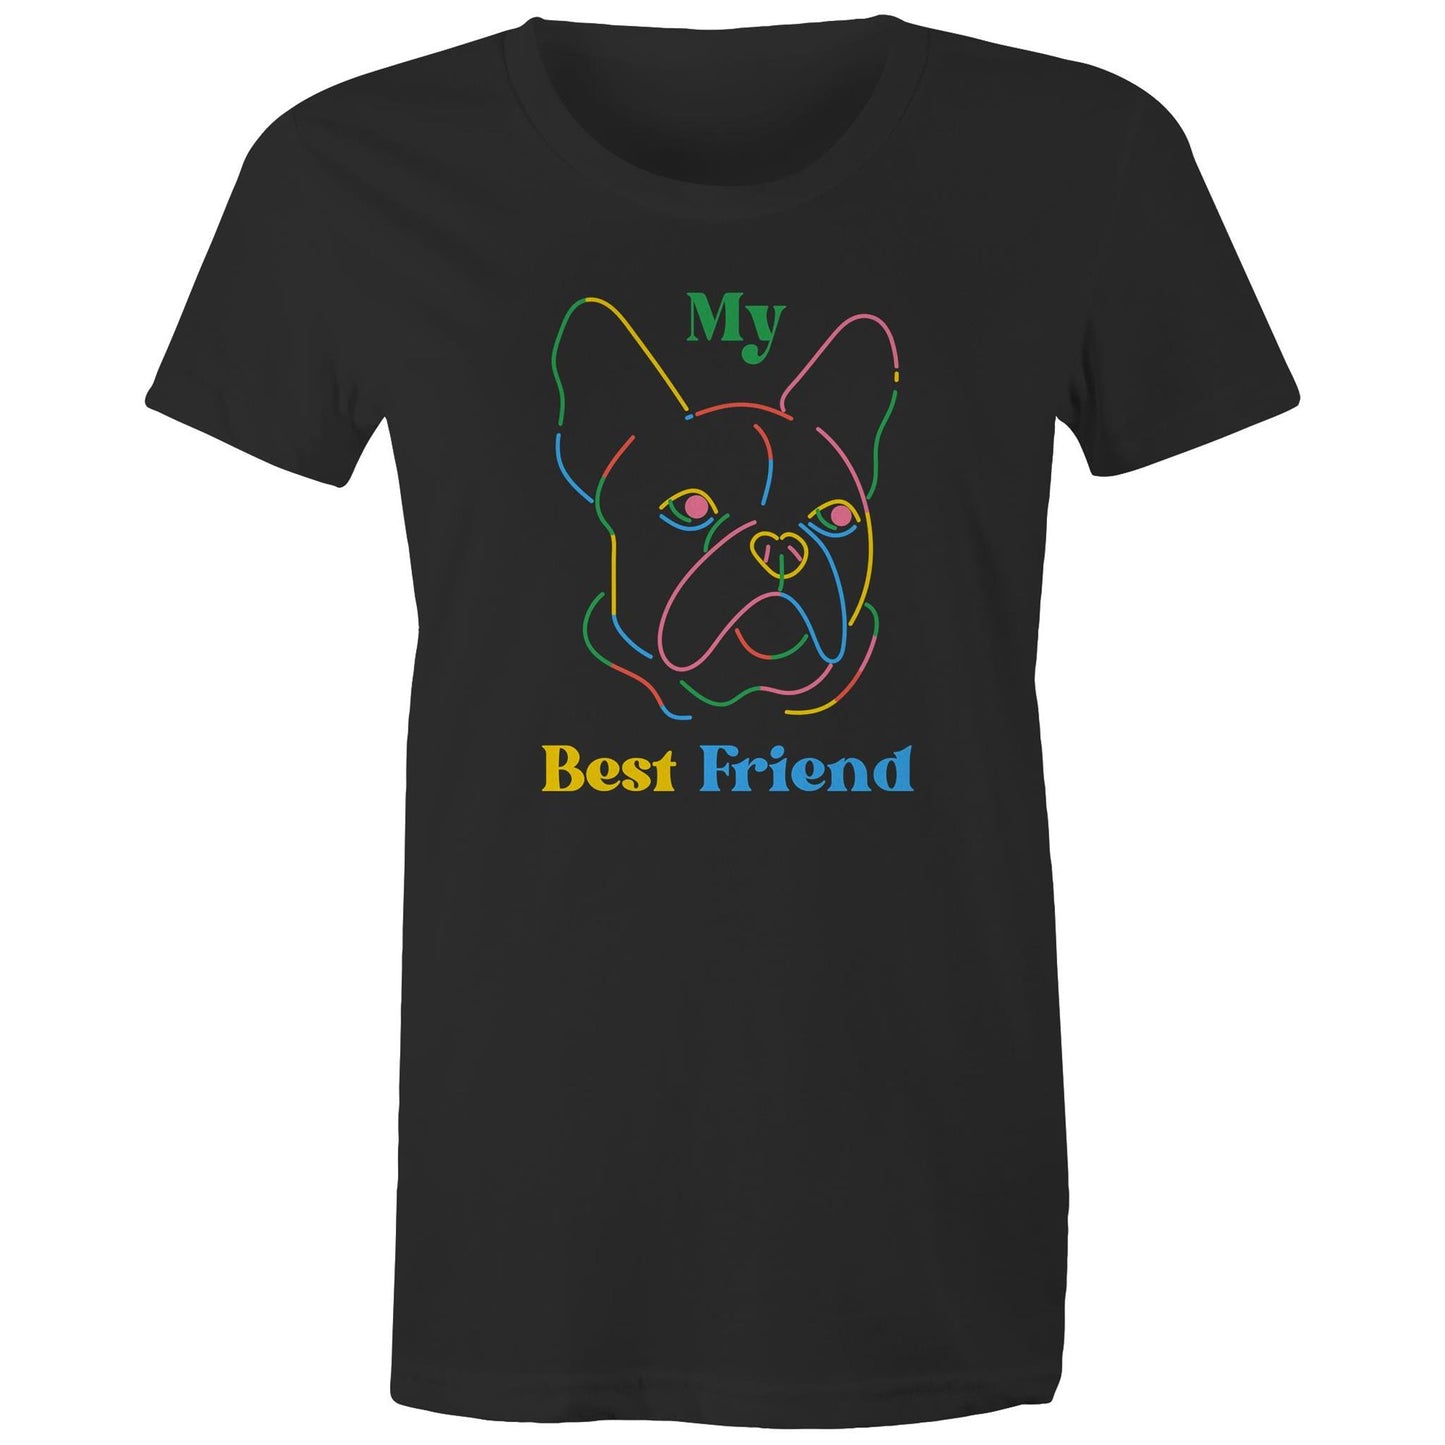 My Best Friend, Dog - Womens T-shirt Black Womens T-shirt animal